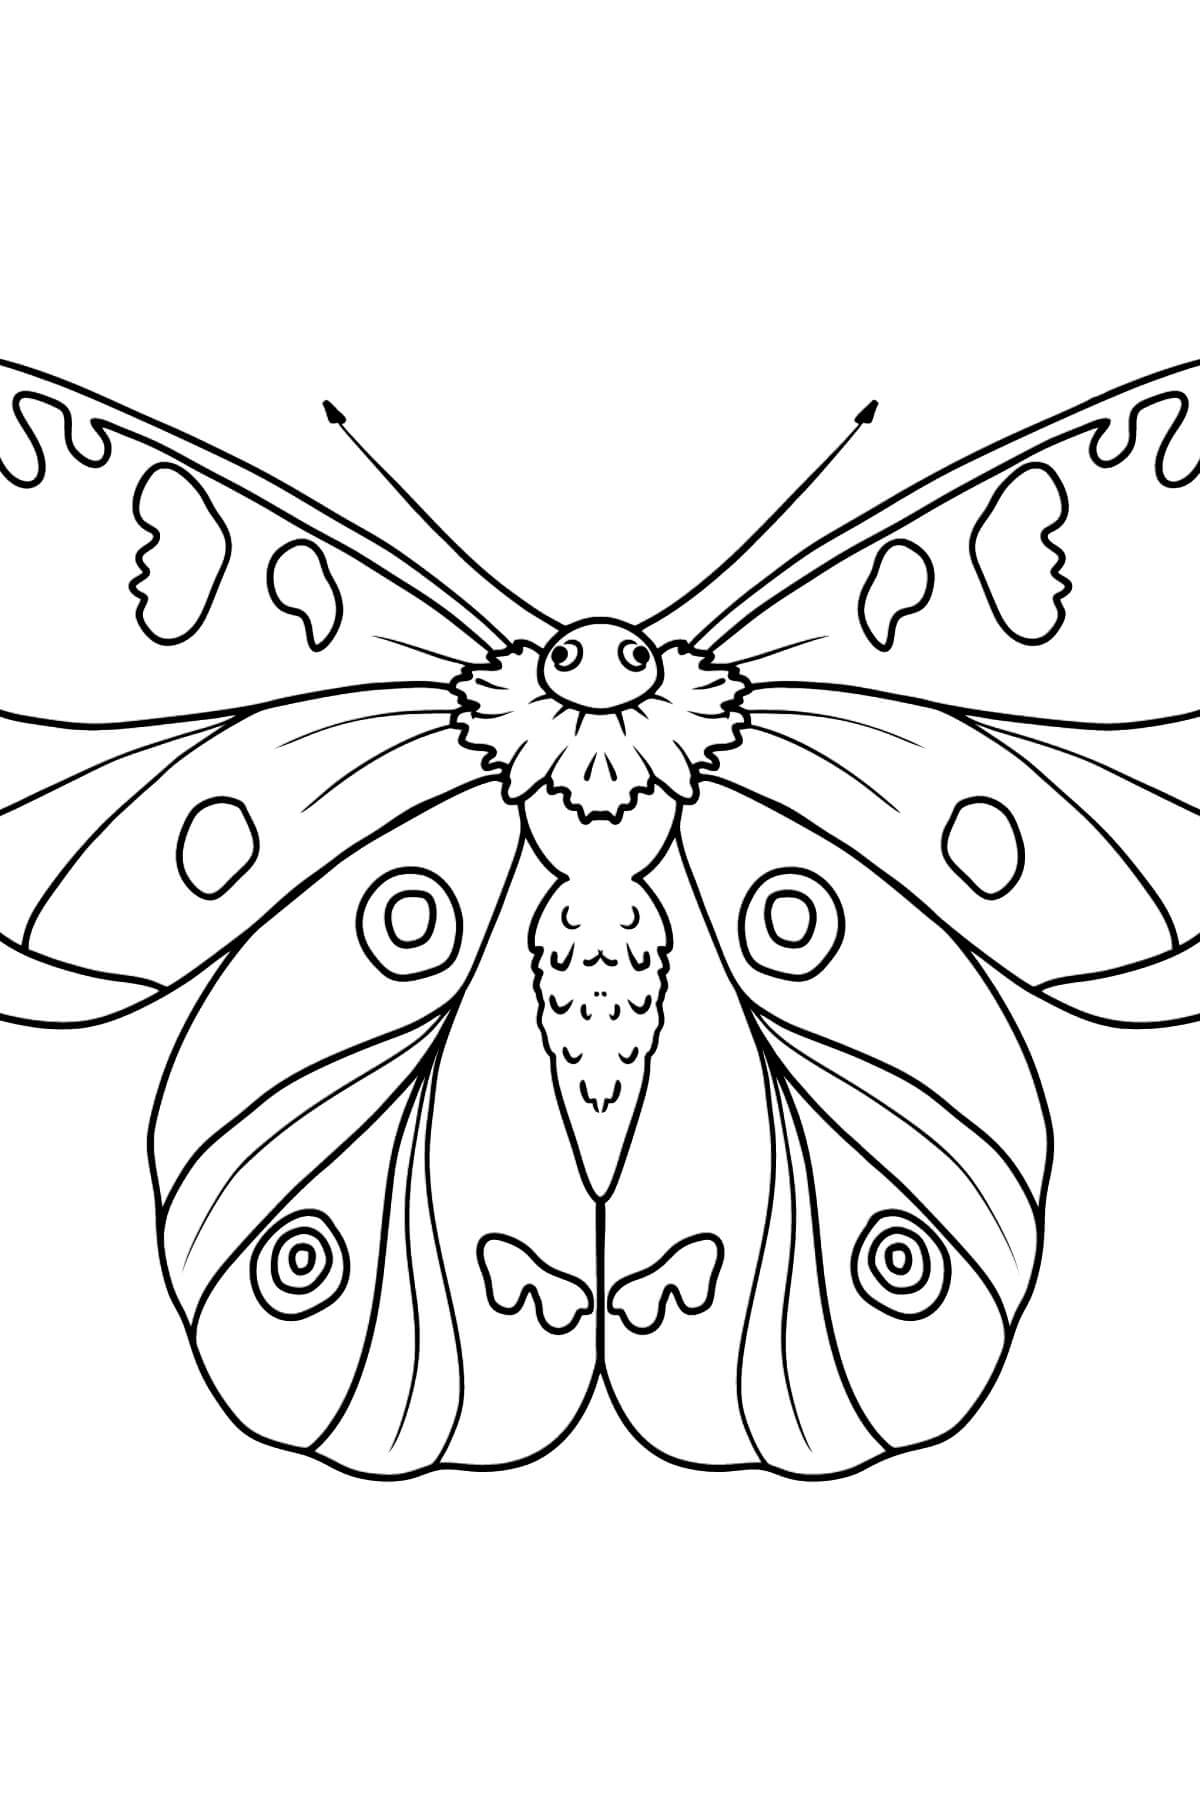 Dibujos de Gran Mariposa para colorear